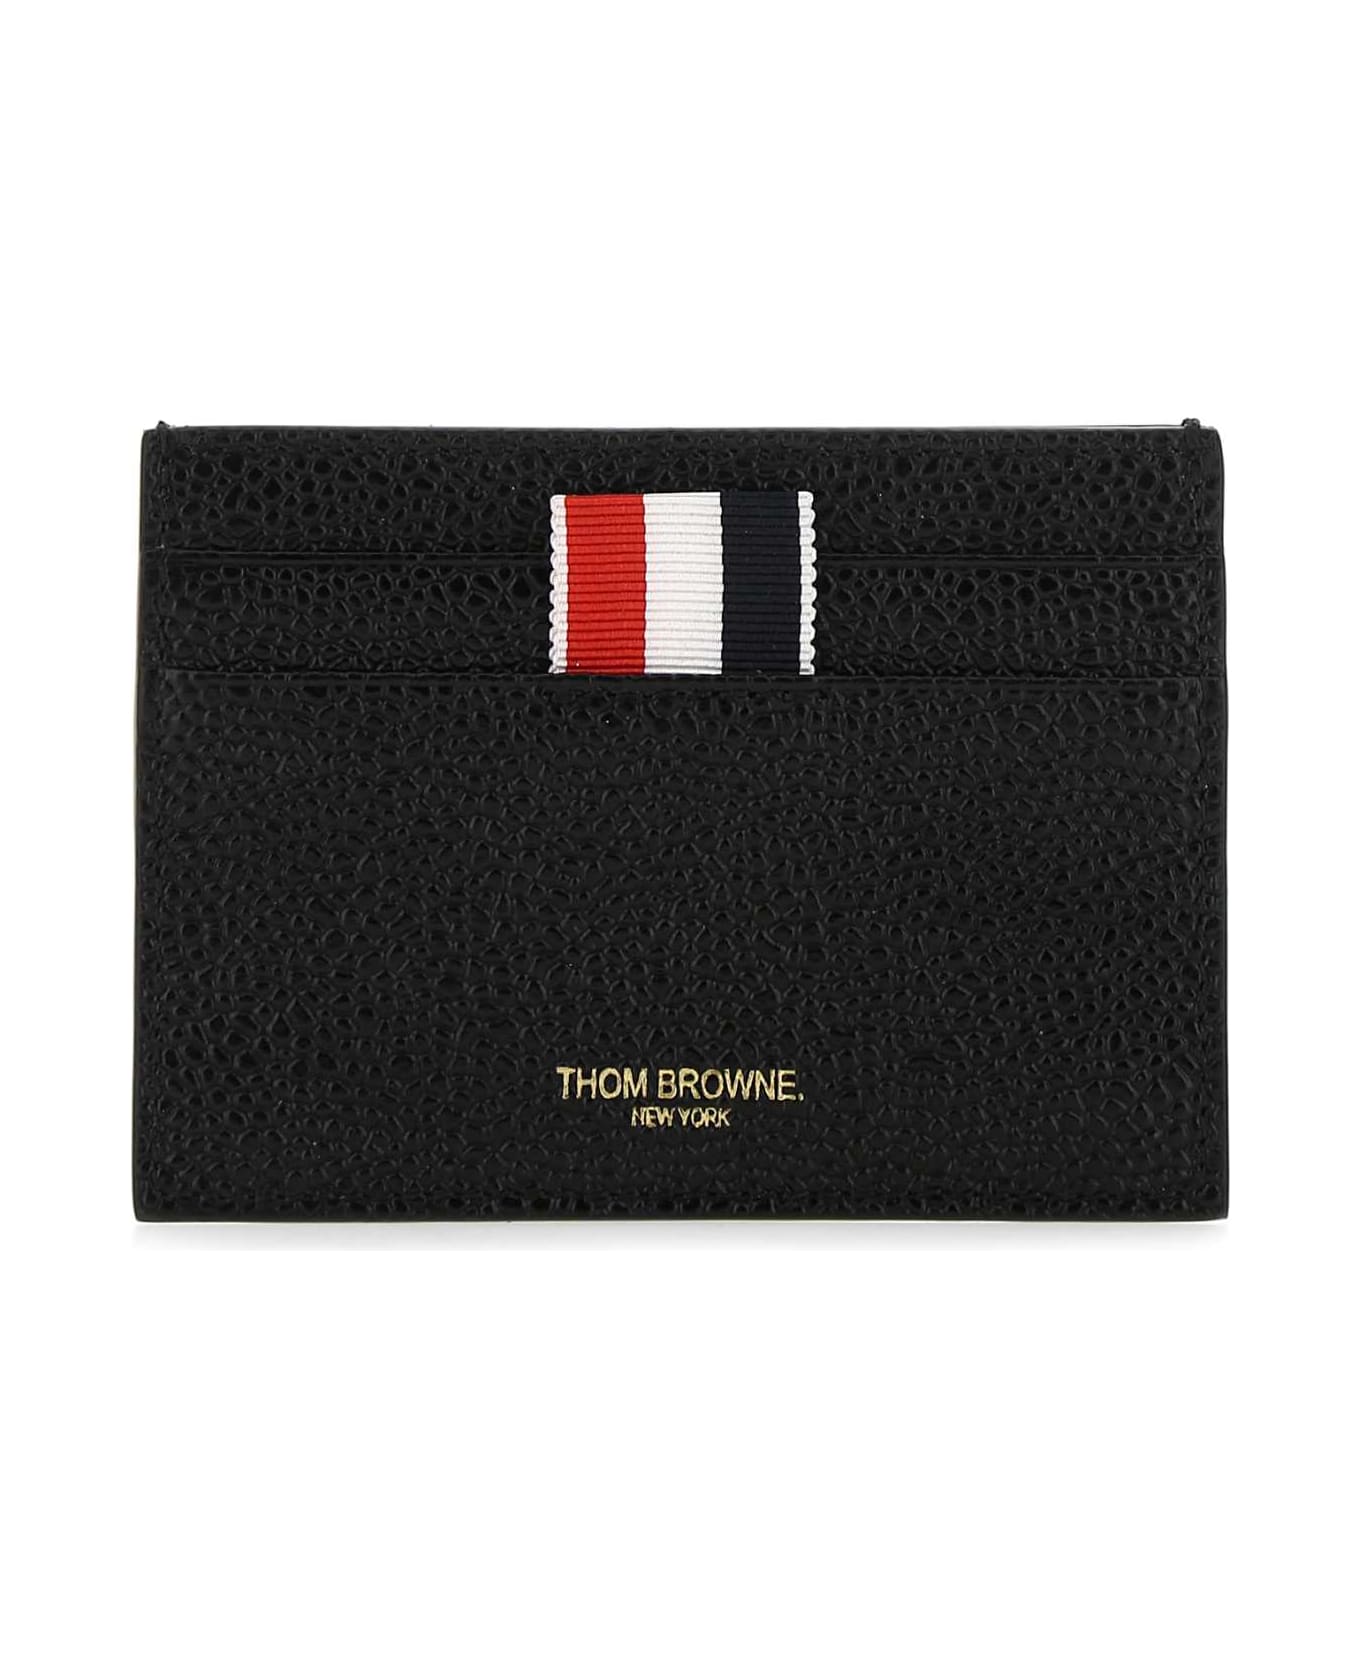 Thom Browne Black Leather Card Holder - 001